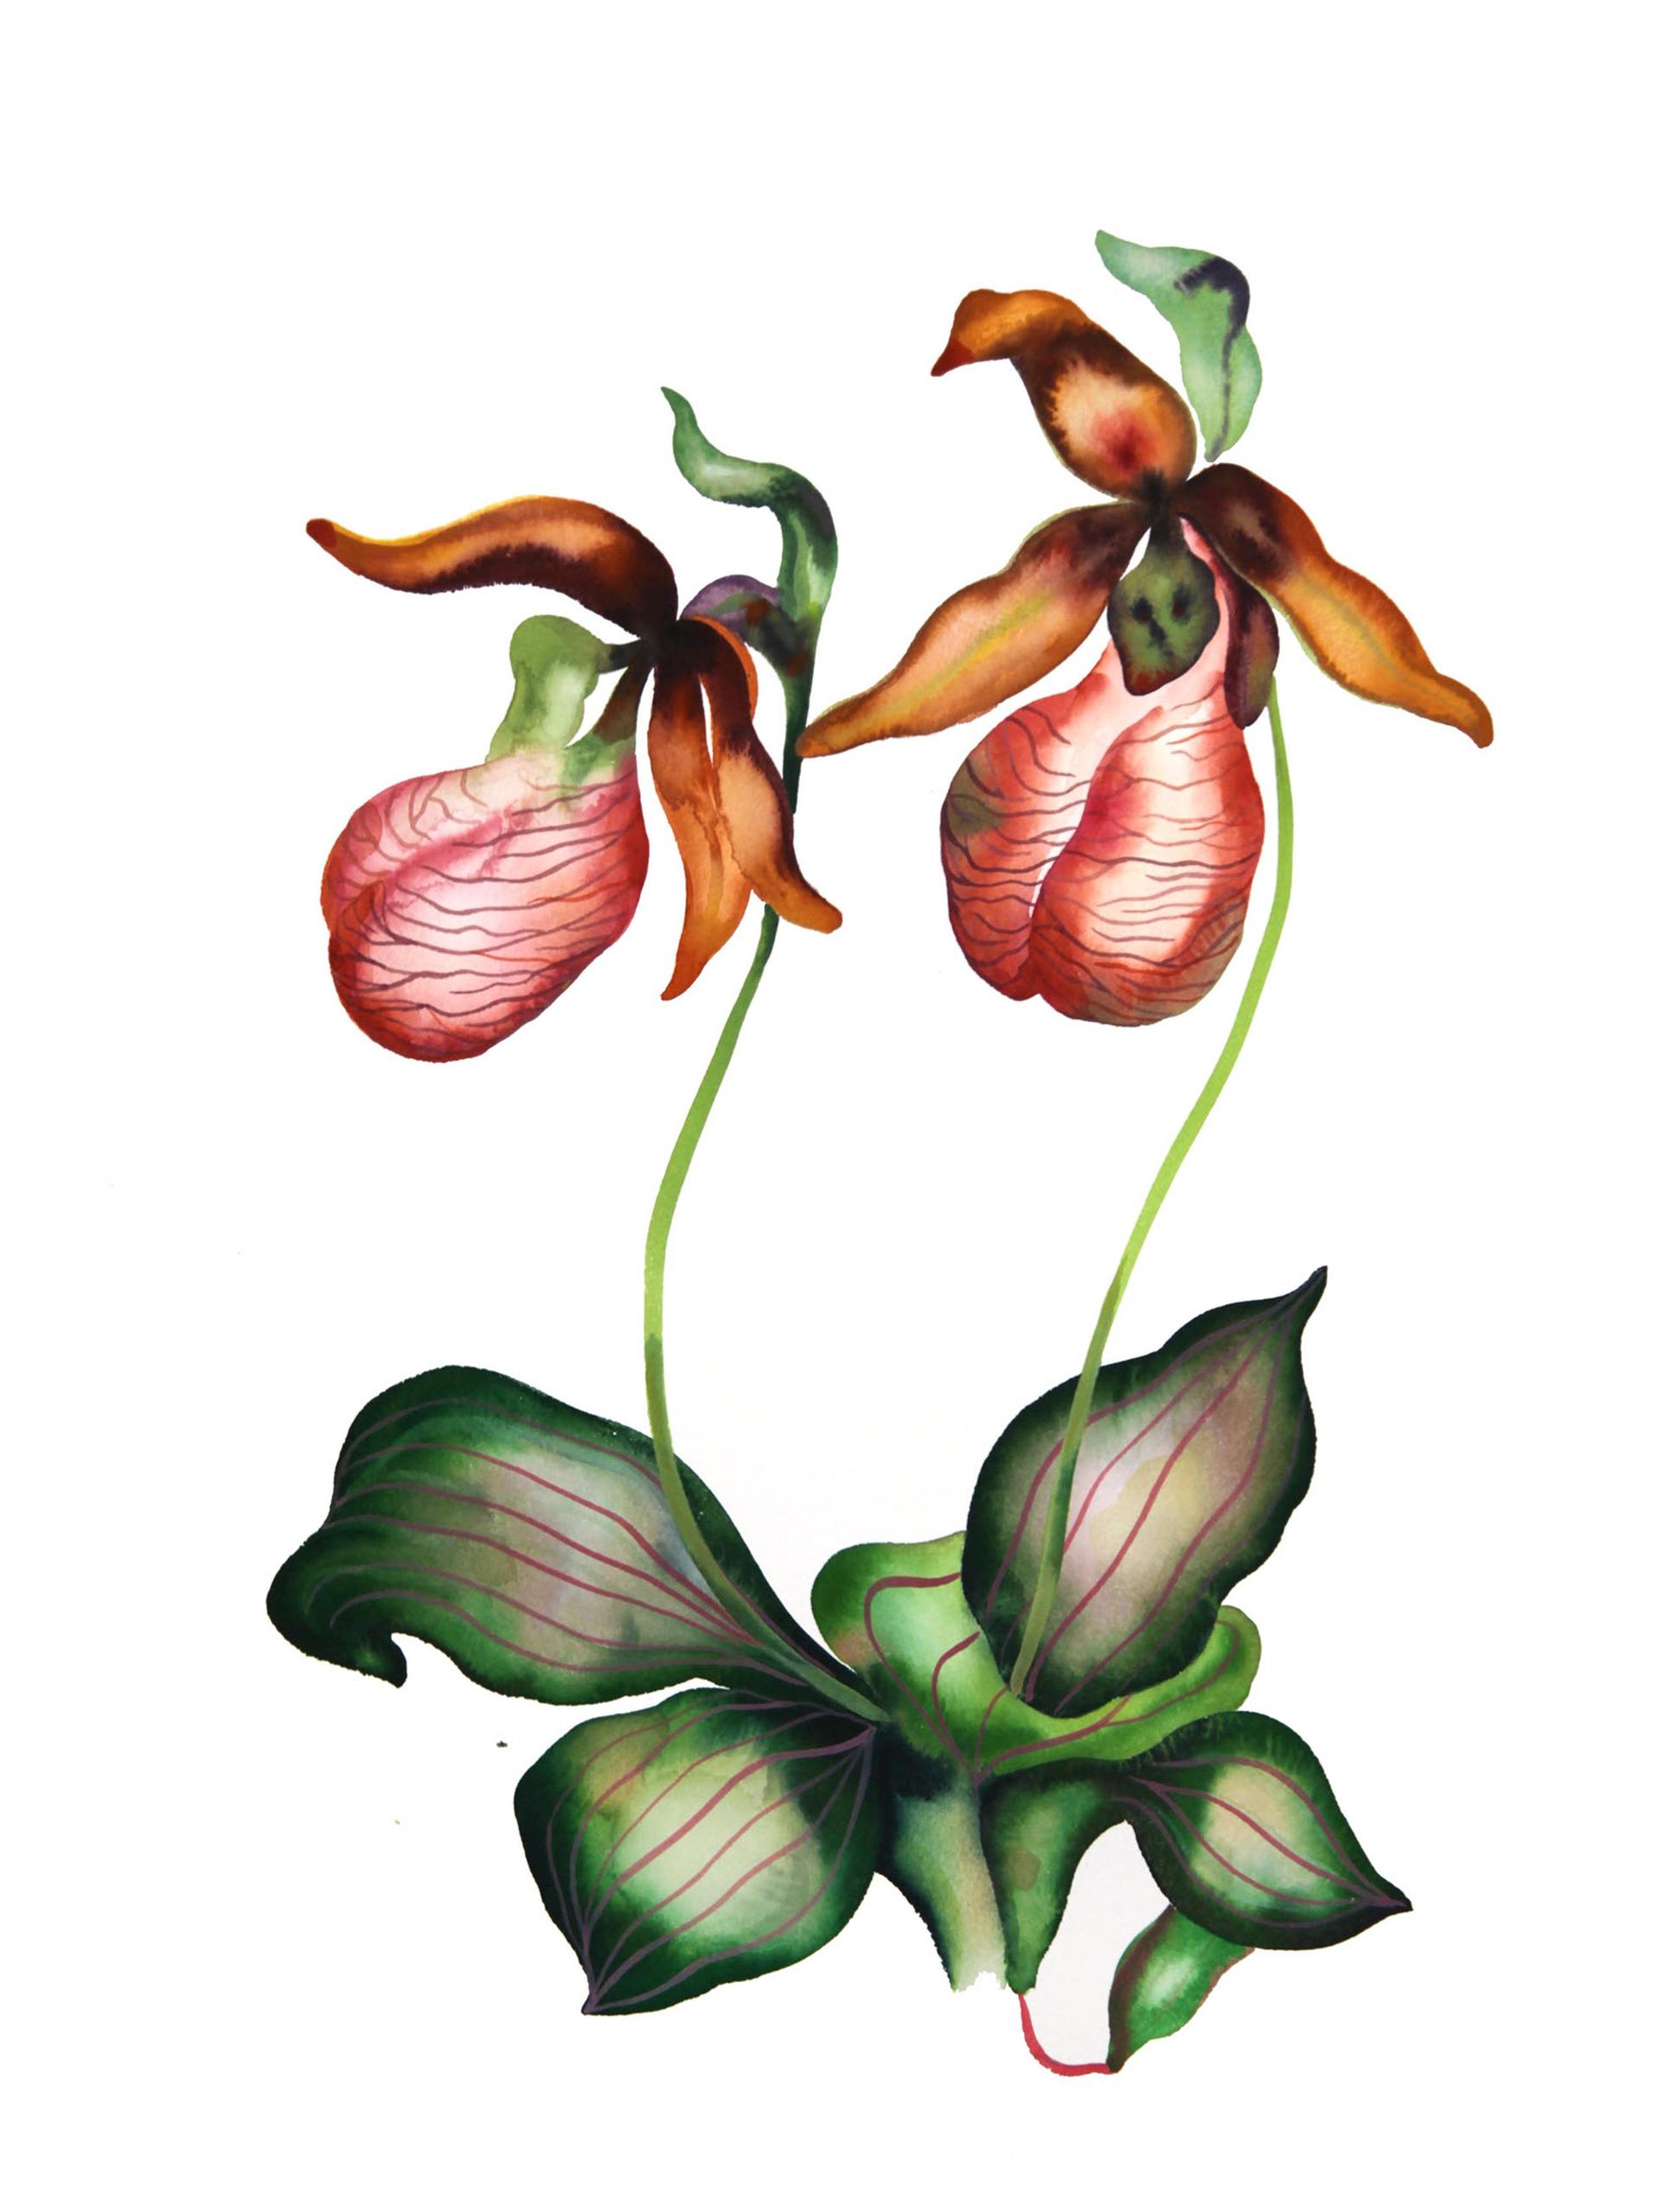 Testicular flowers